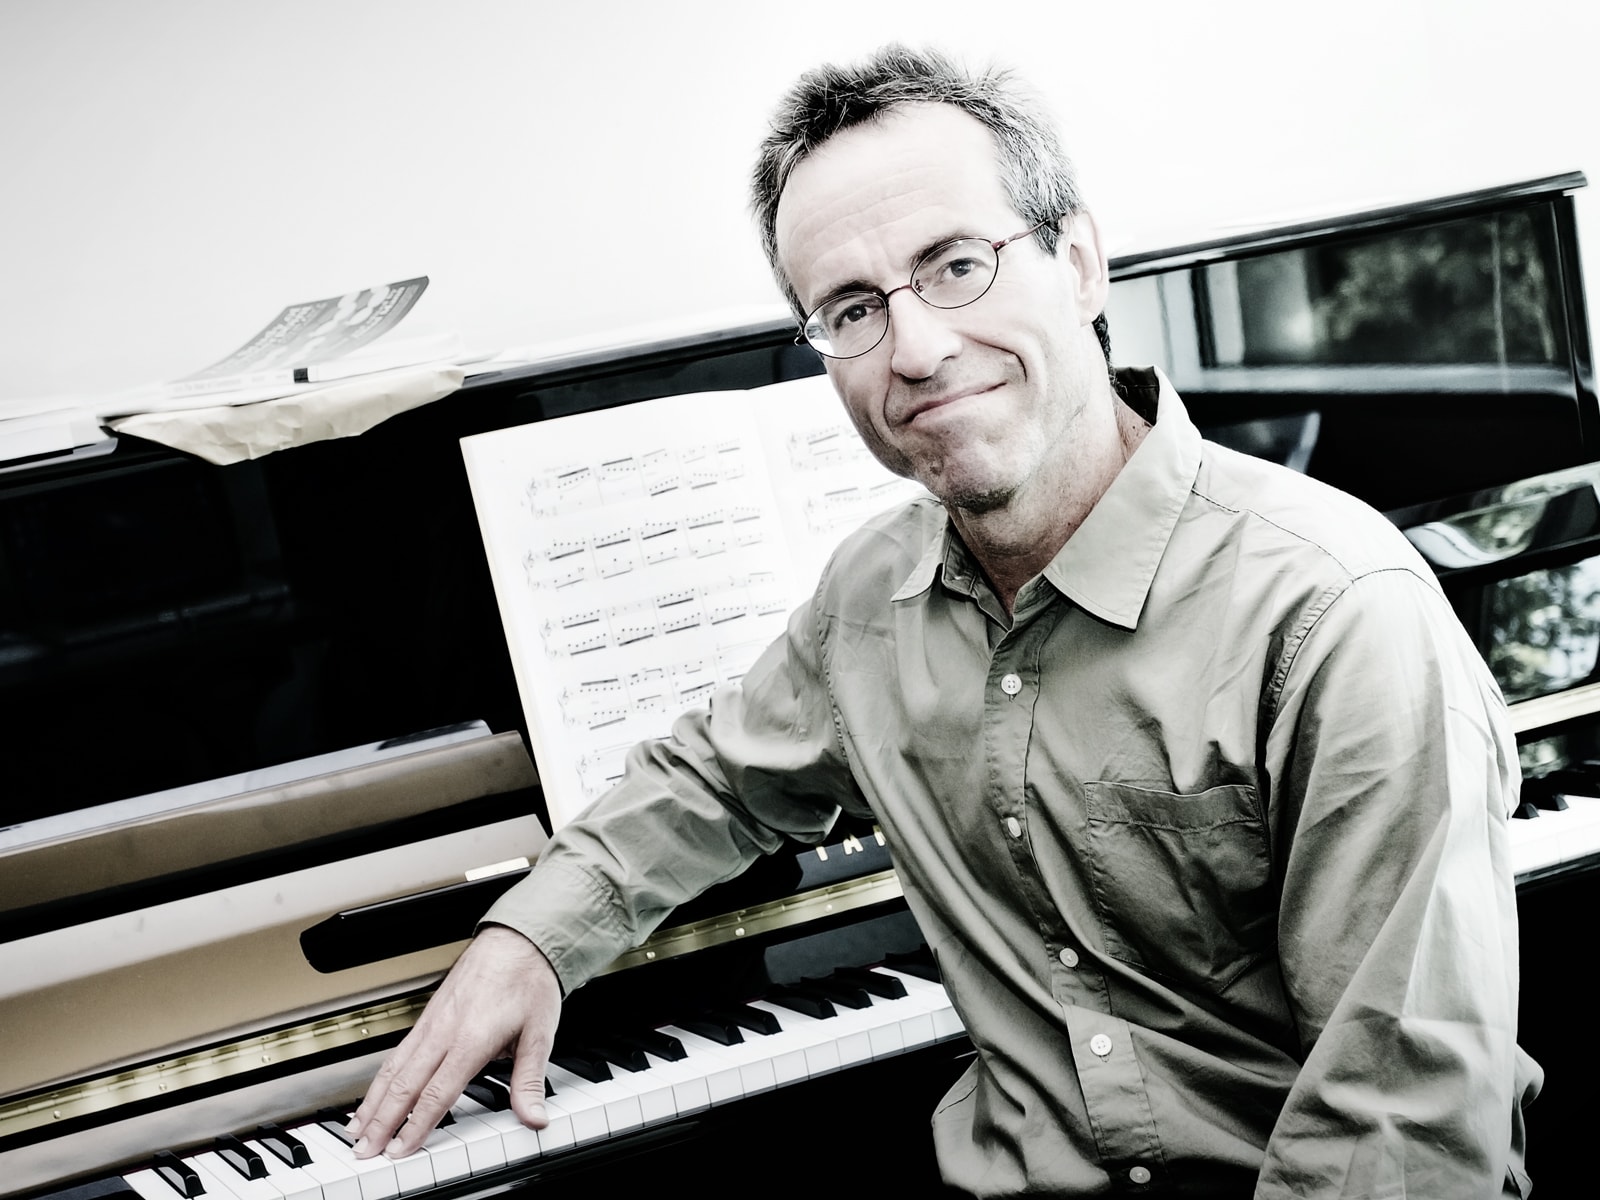 DigiPen Instructor Bruce Stark Follows the Call of Music